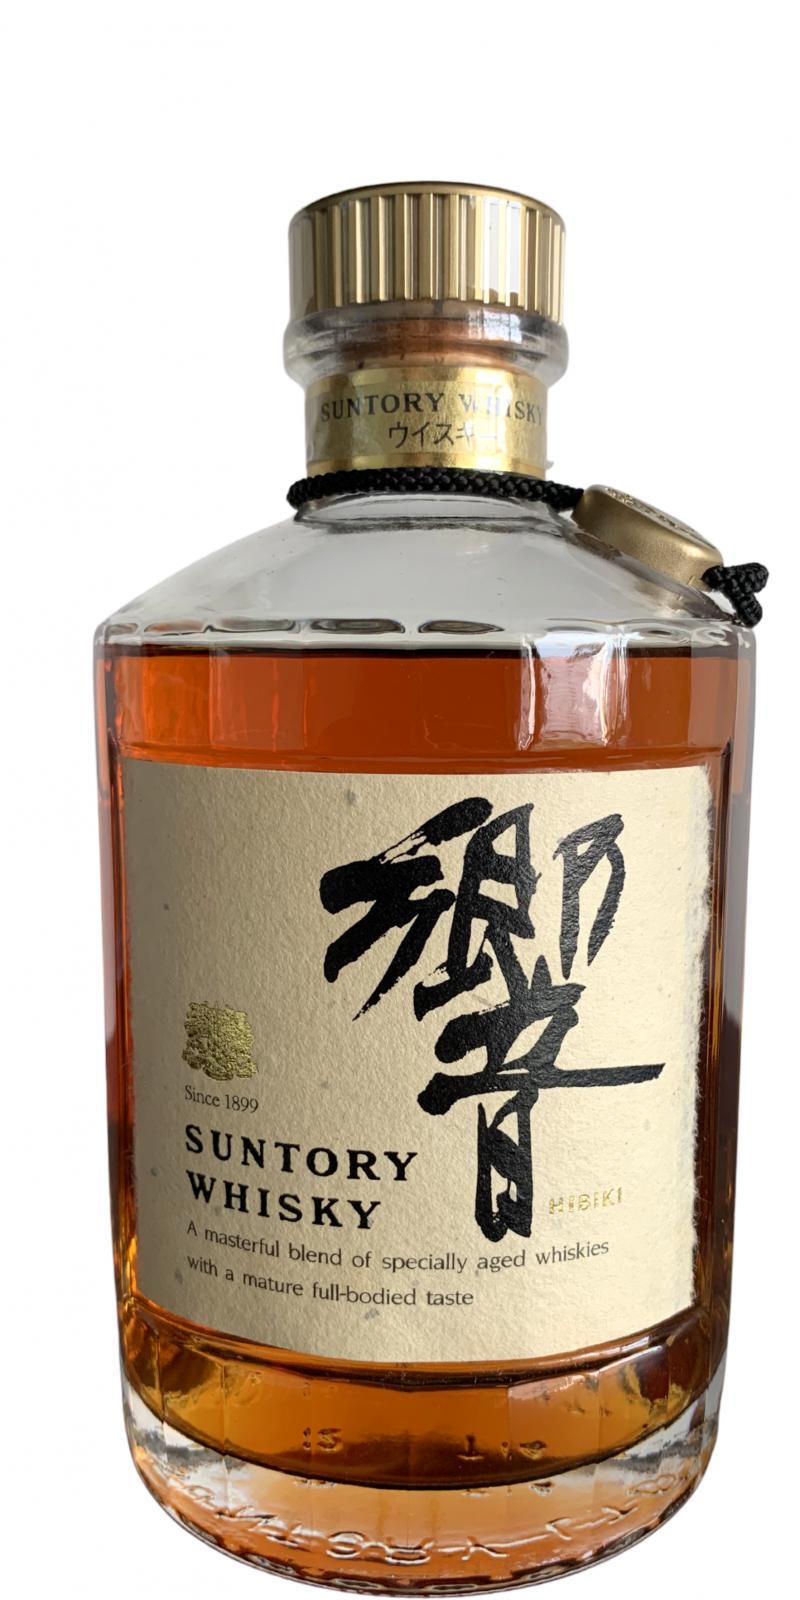 The First Hibiki: Suntory's first-ever Hibiki Whisky REVIEW 